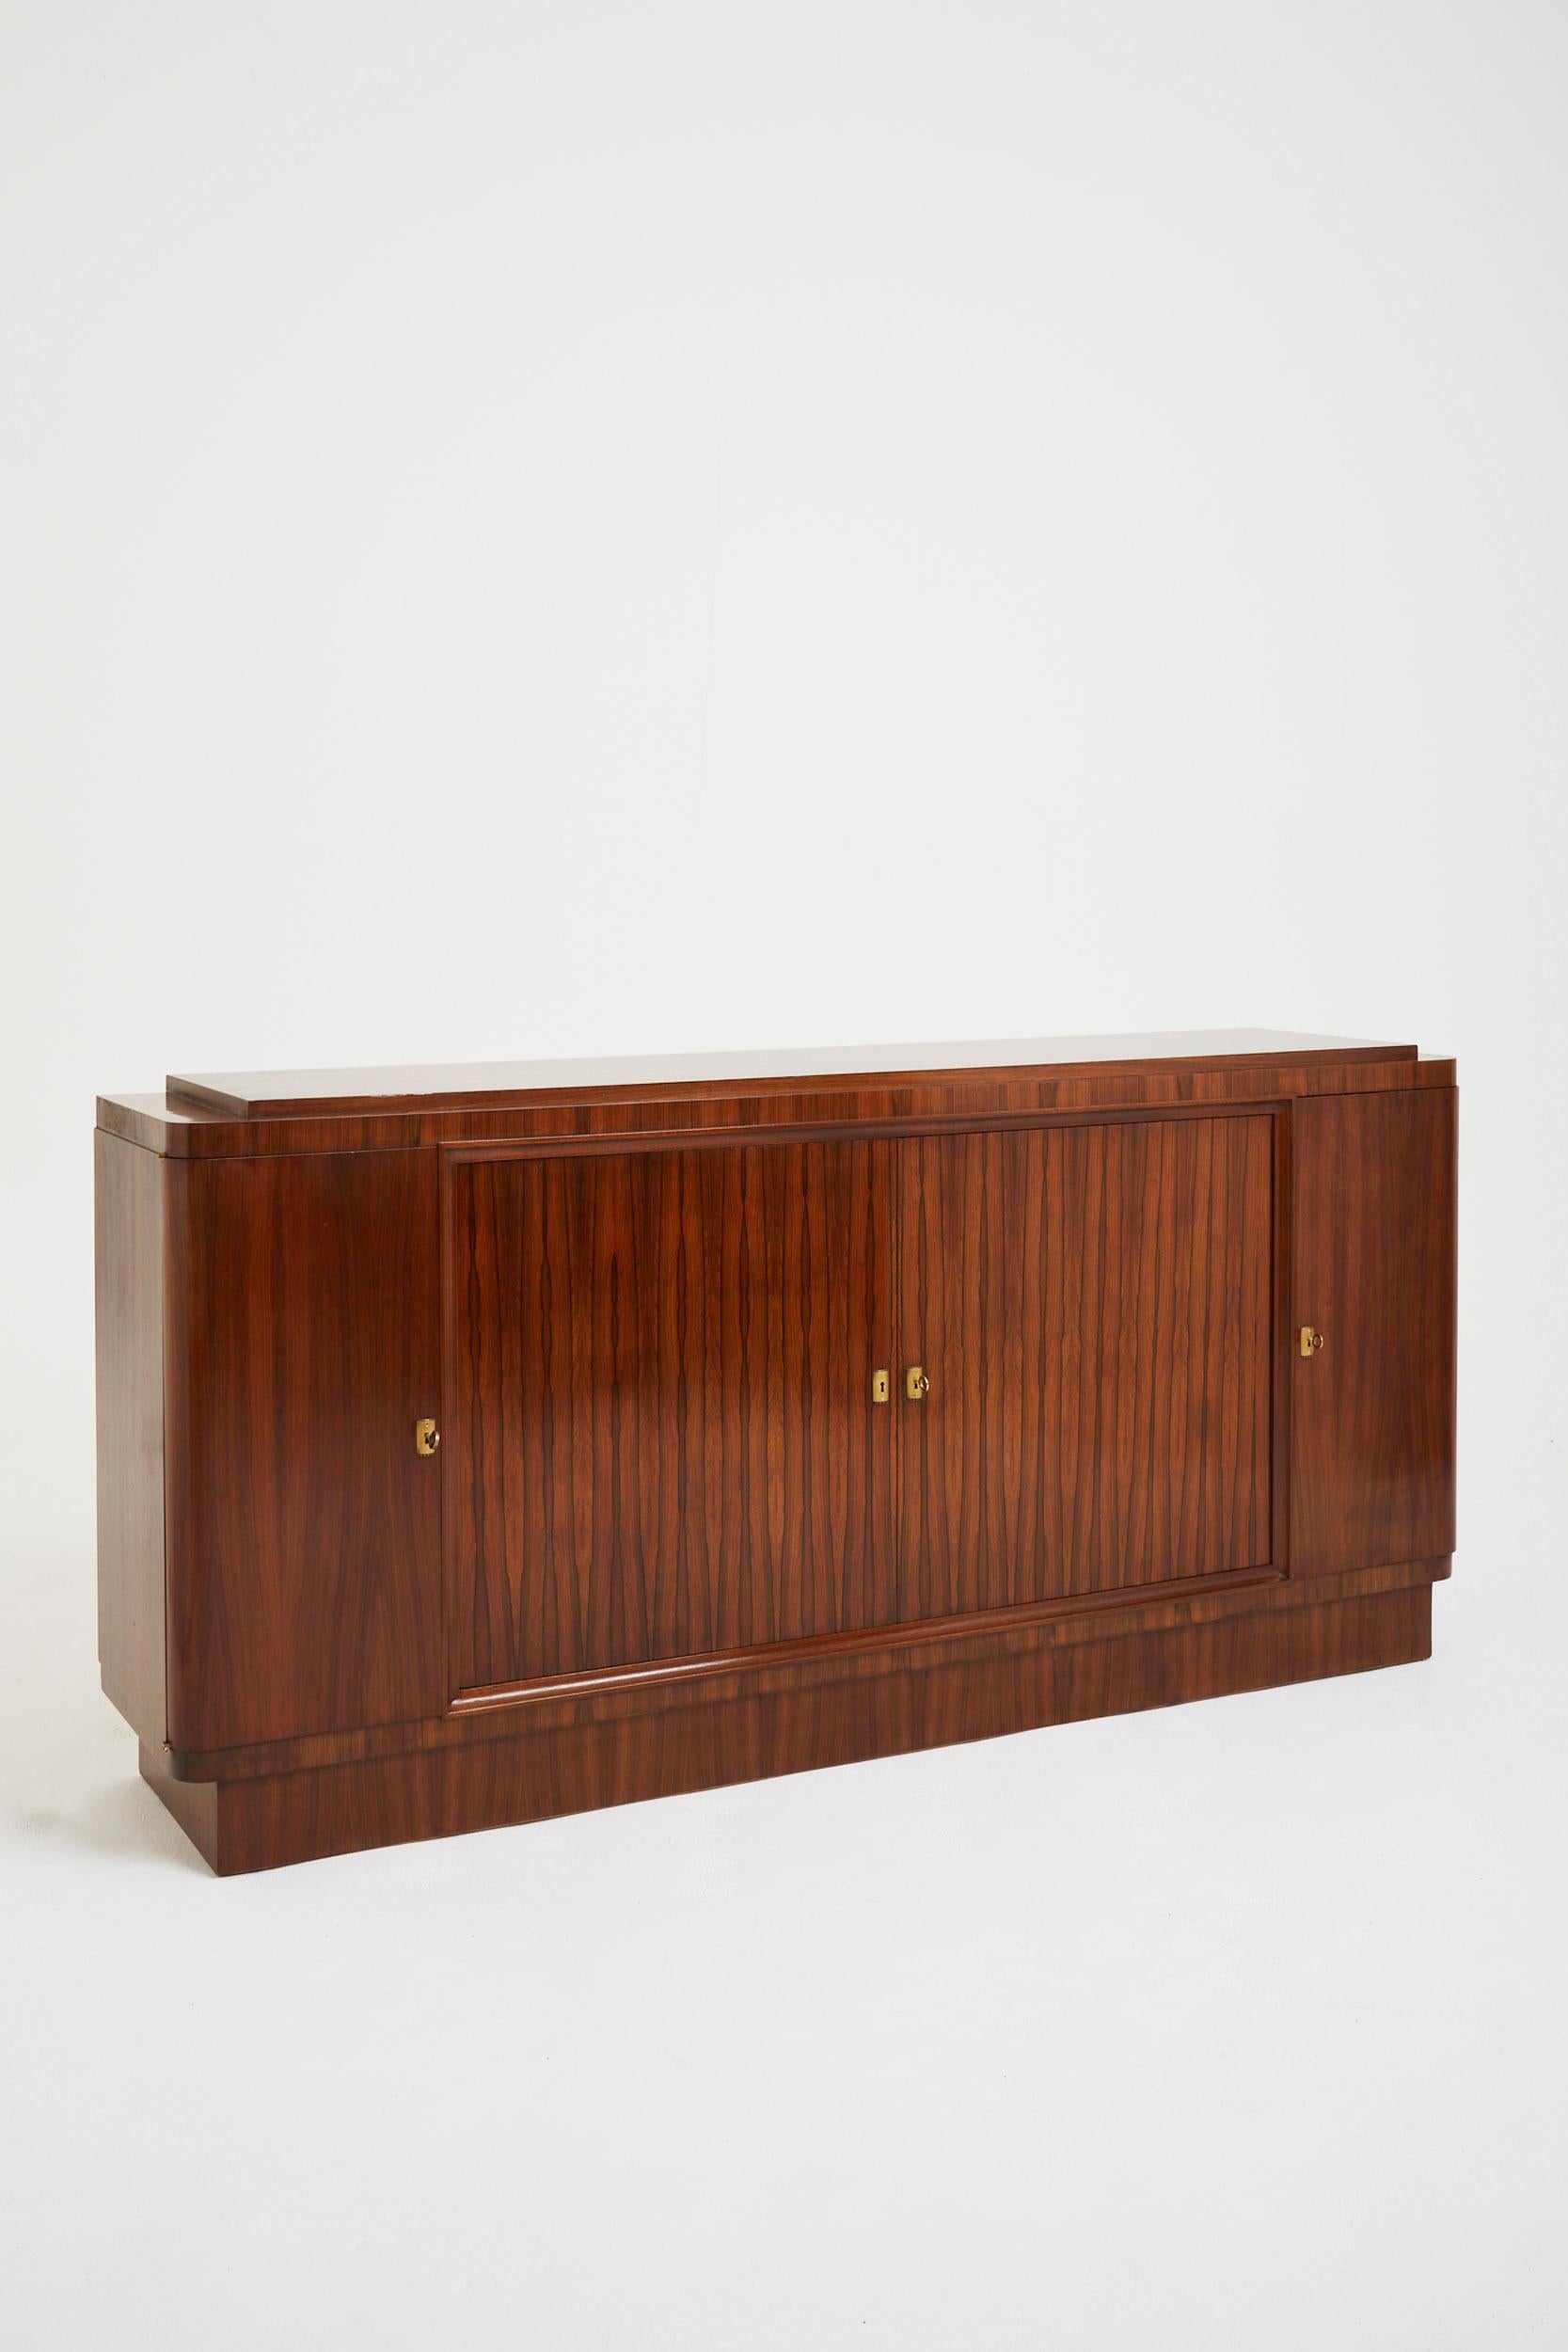 20th Century Art Deco Rosewood Sideboard